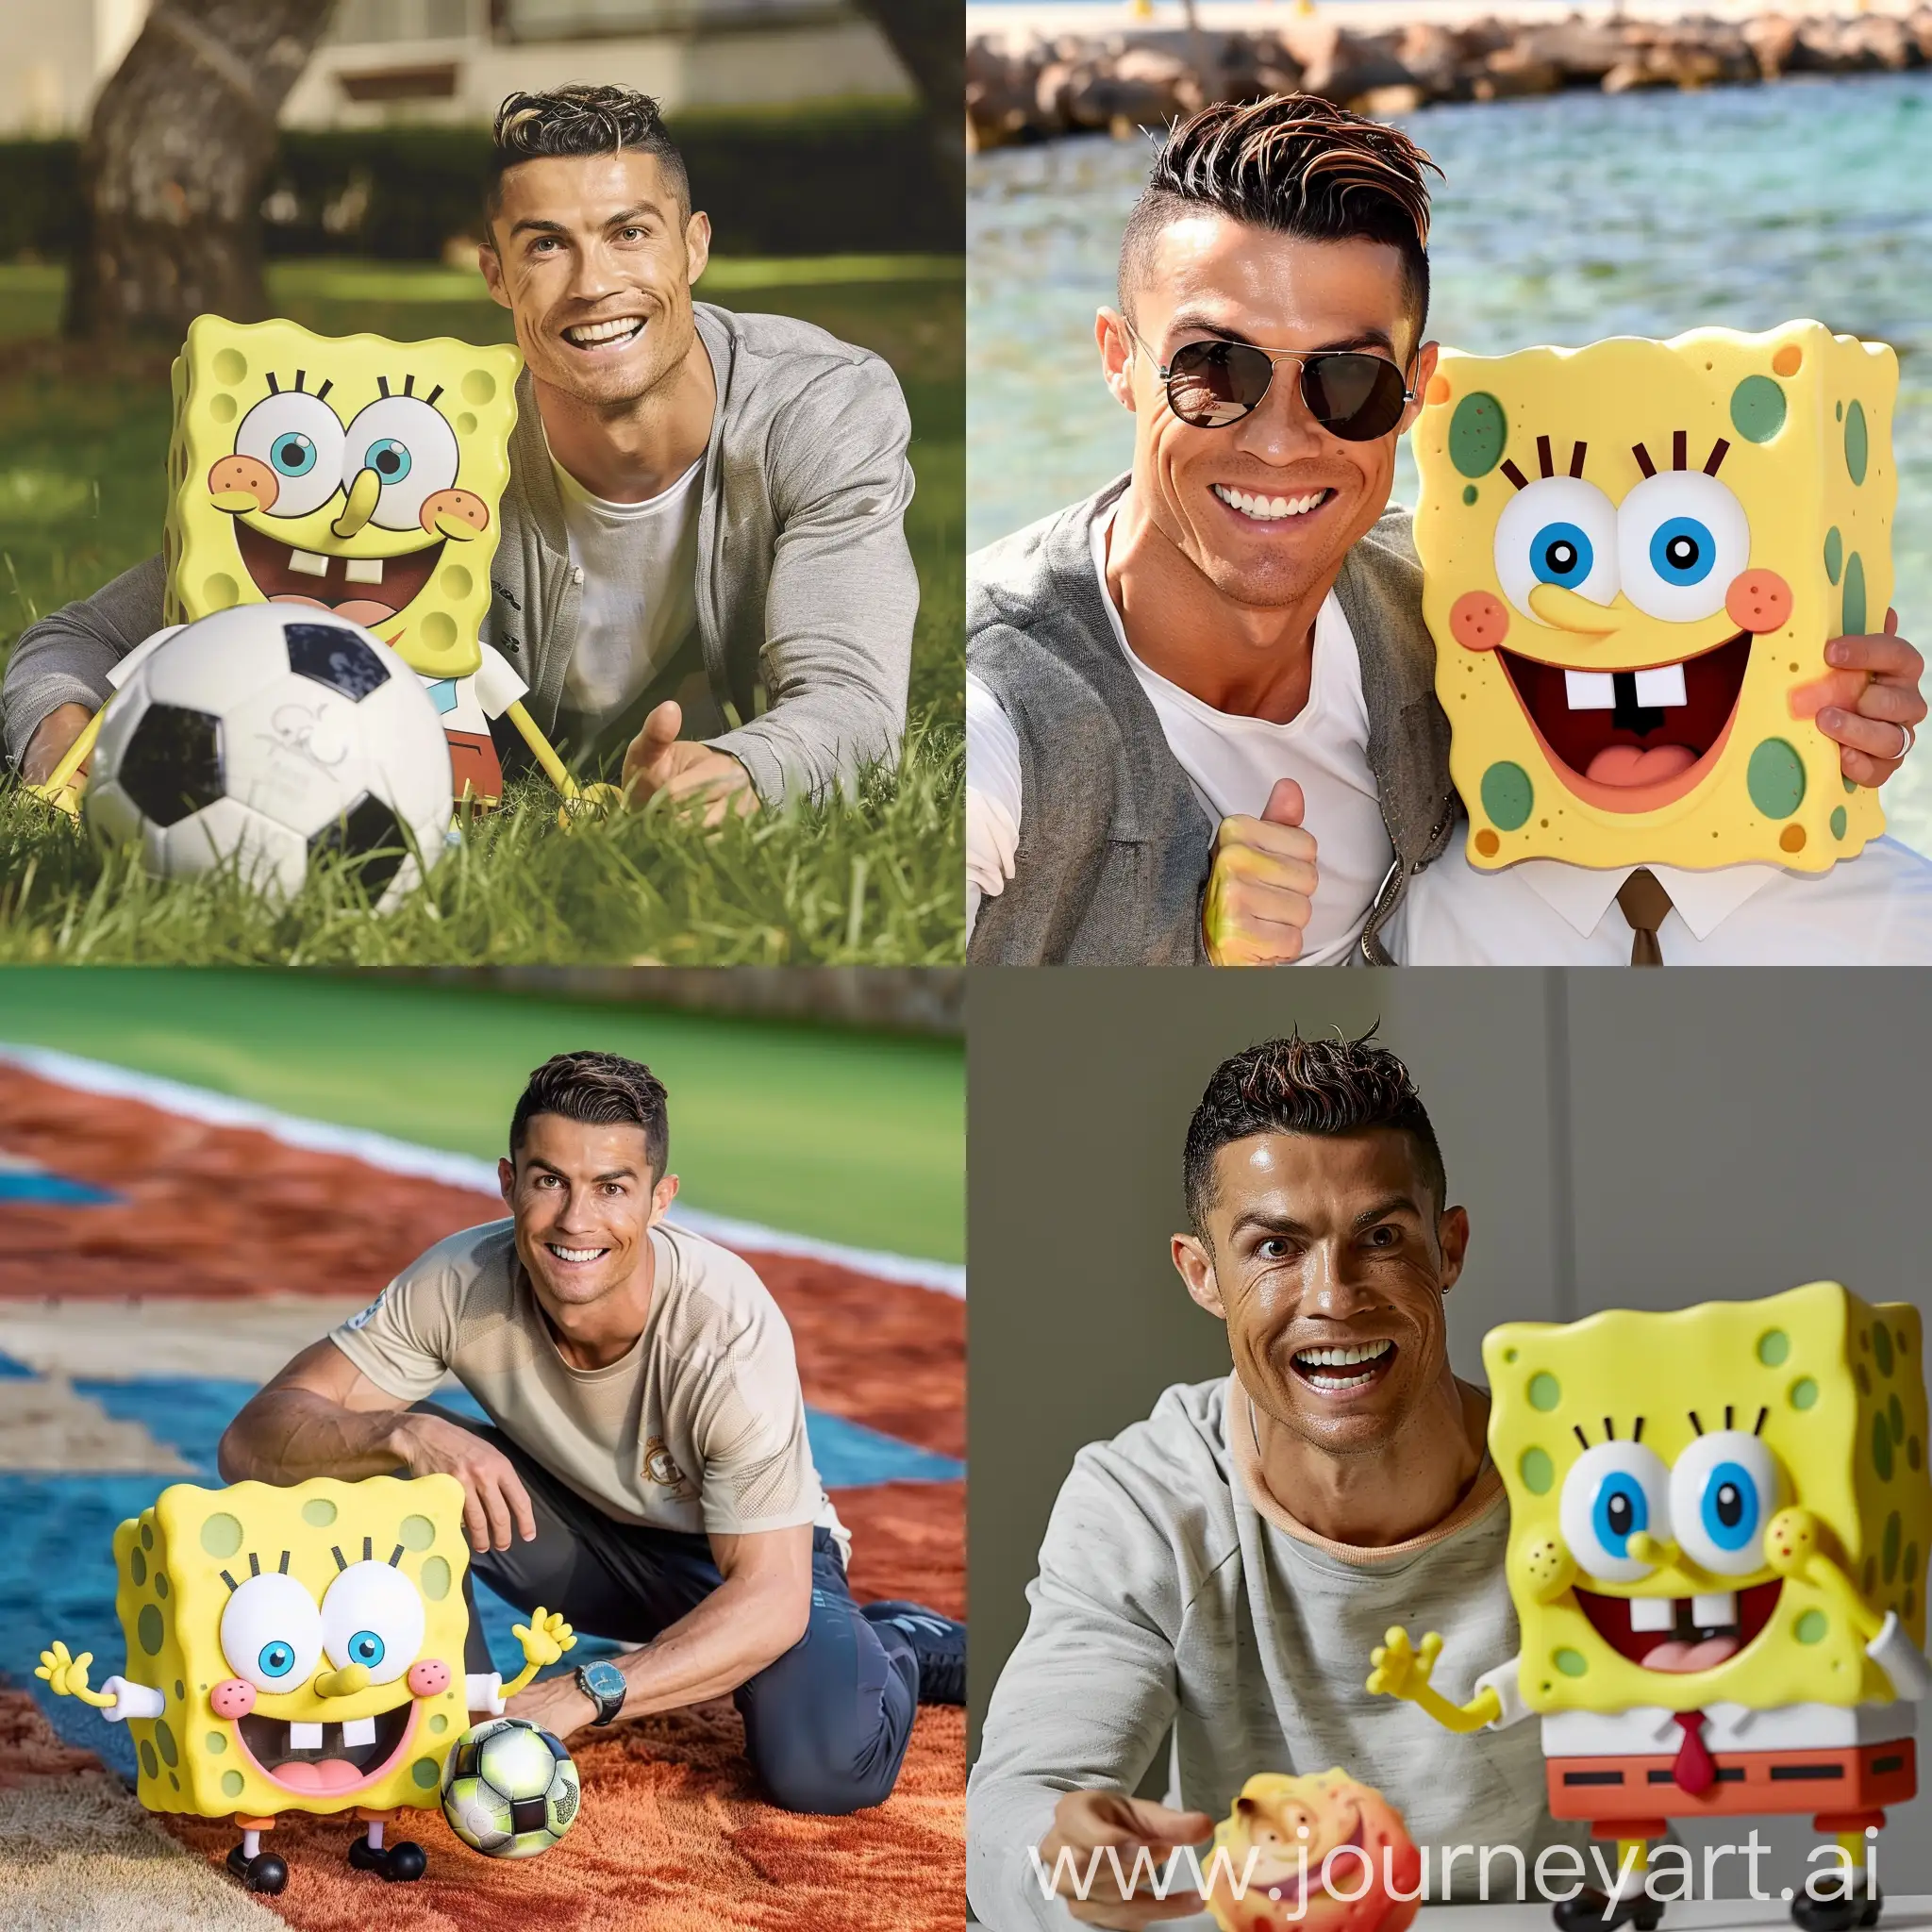 Soccer-Icon-Ronaldo-Enjoying-a-Fun-Game-with-Animated-Sea-Creature-Spongebob